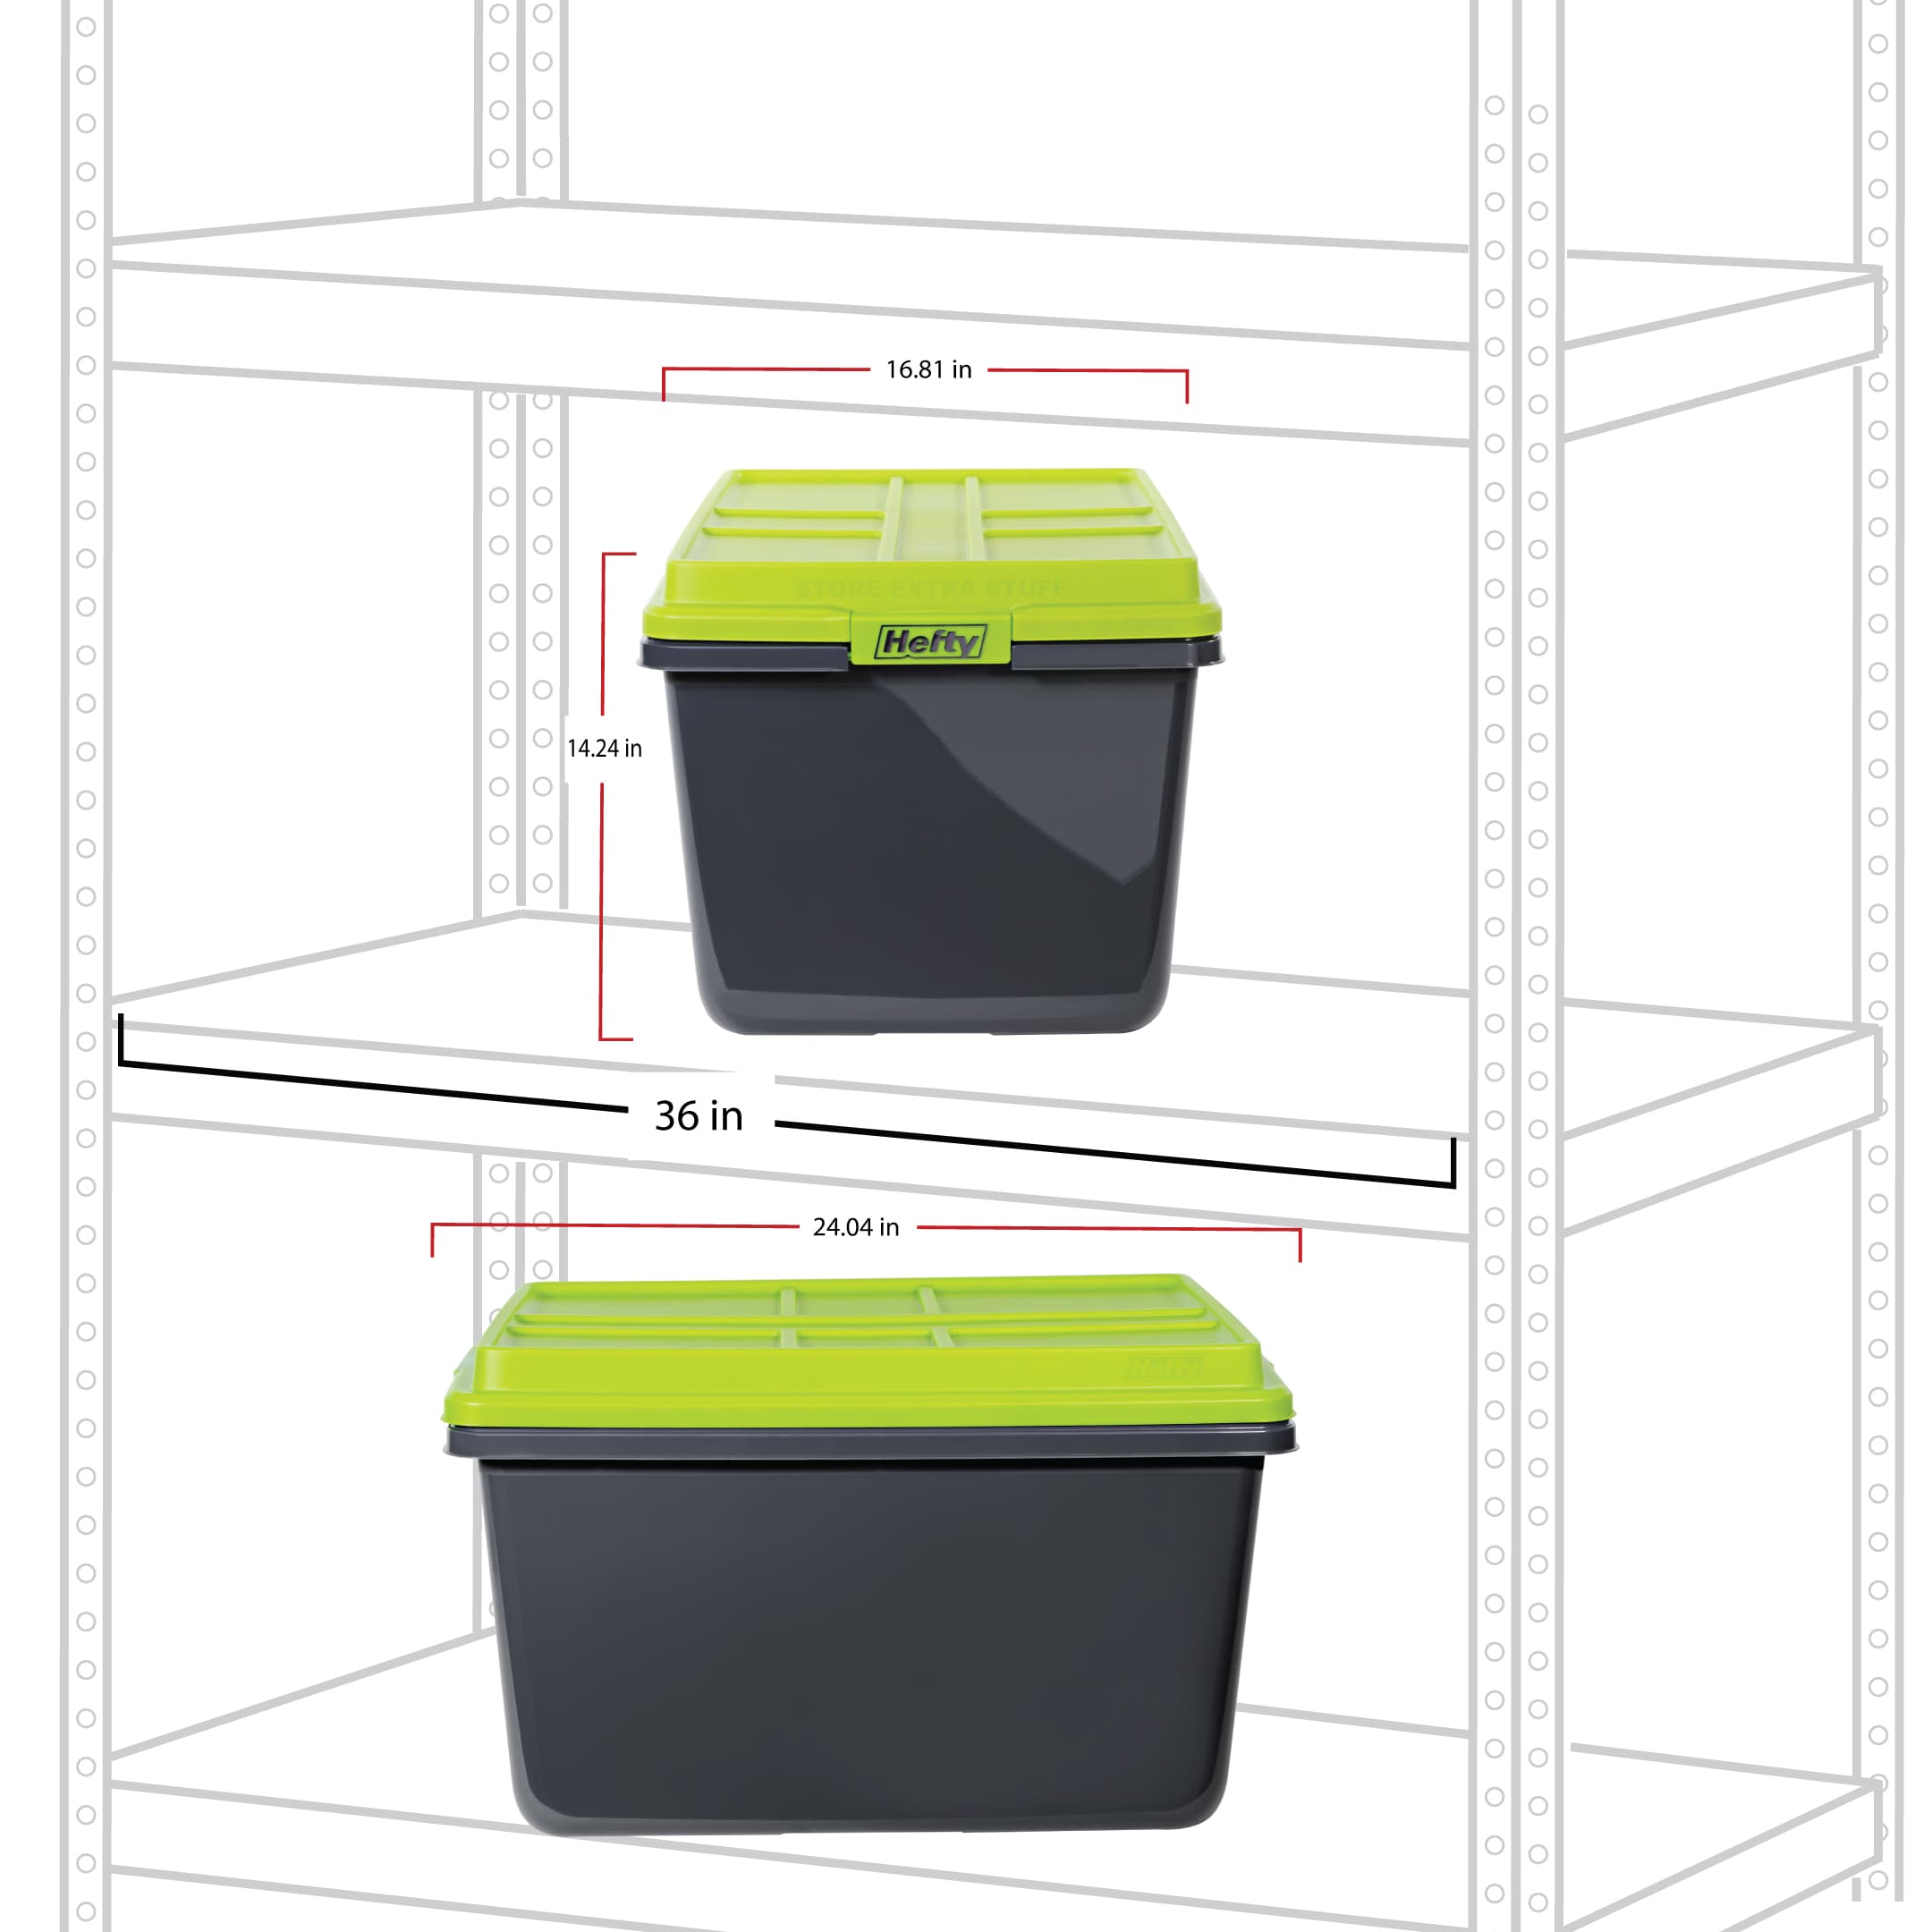 Hefty MAX Pro 72 Quart Storage Tote Gray, 6/Pack (7170HFTCOM52252